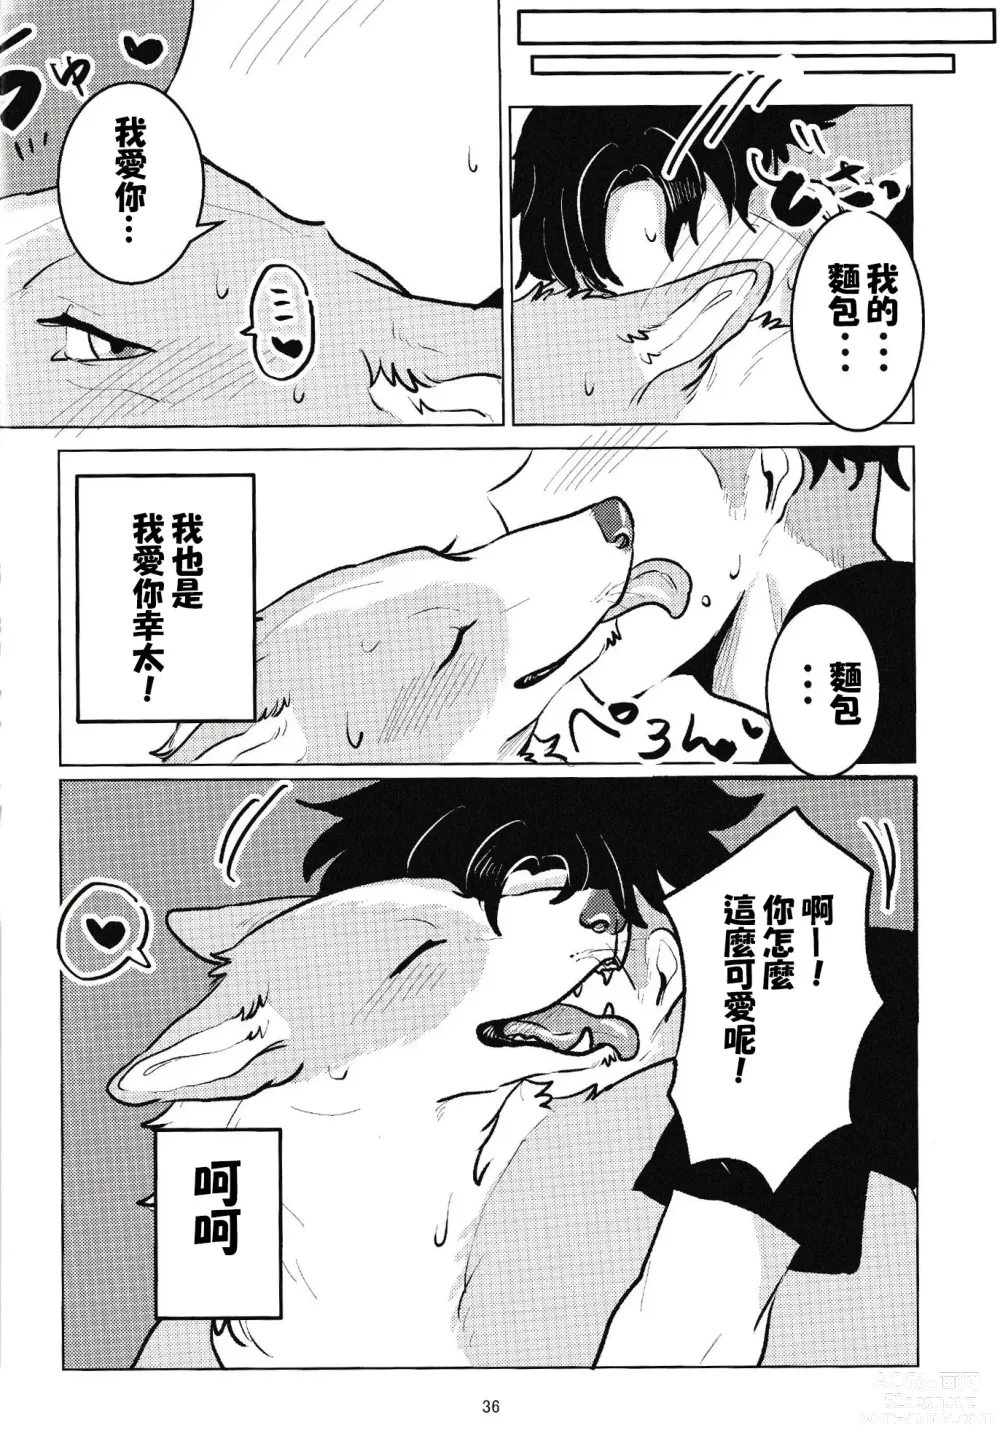 Page 35 of doujinshi 魅惑のパン